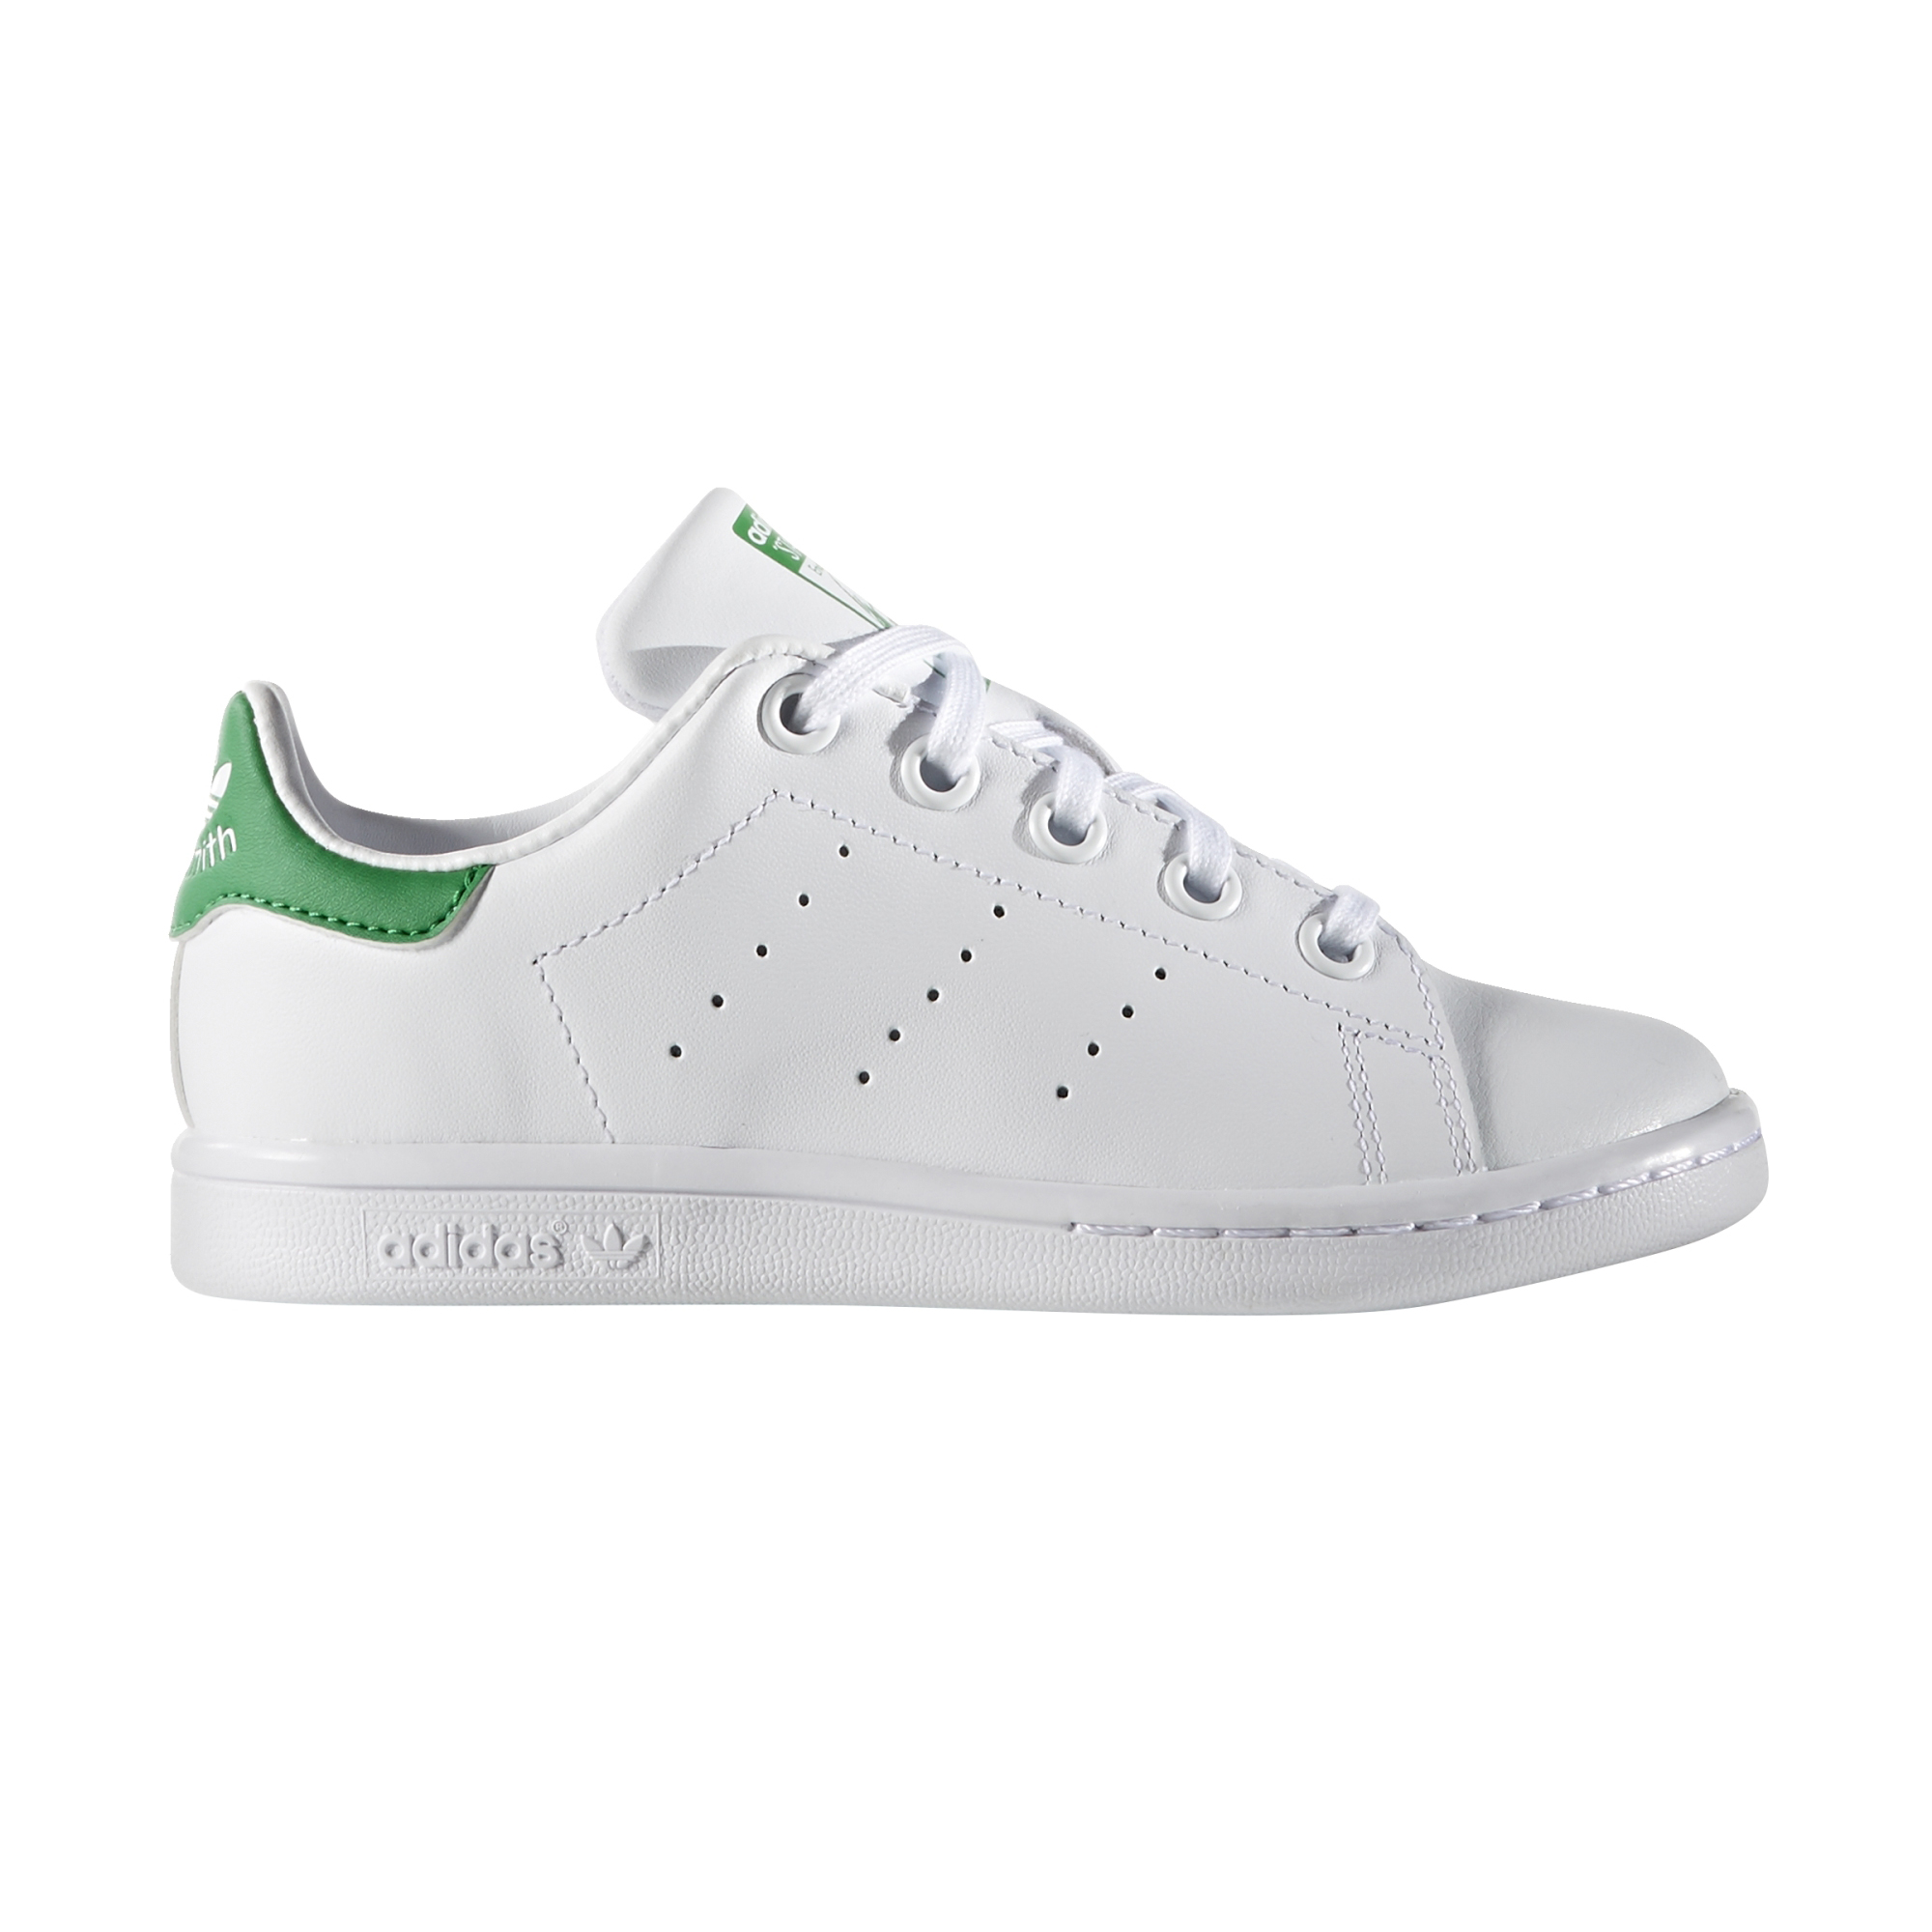 Adidas Originals Smith C (white/green)